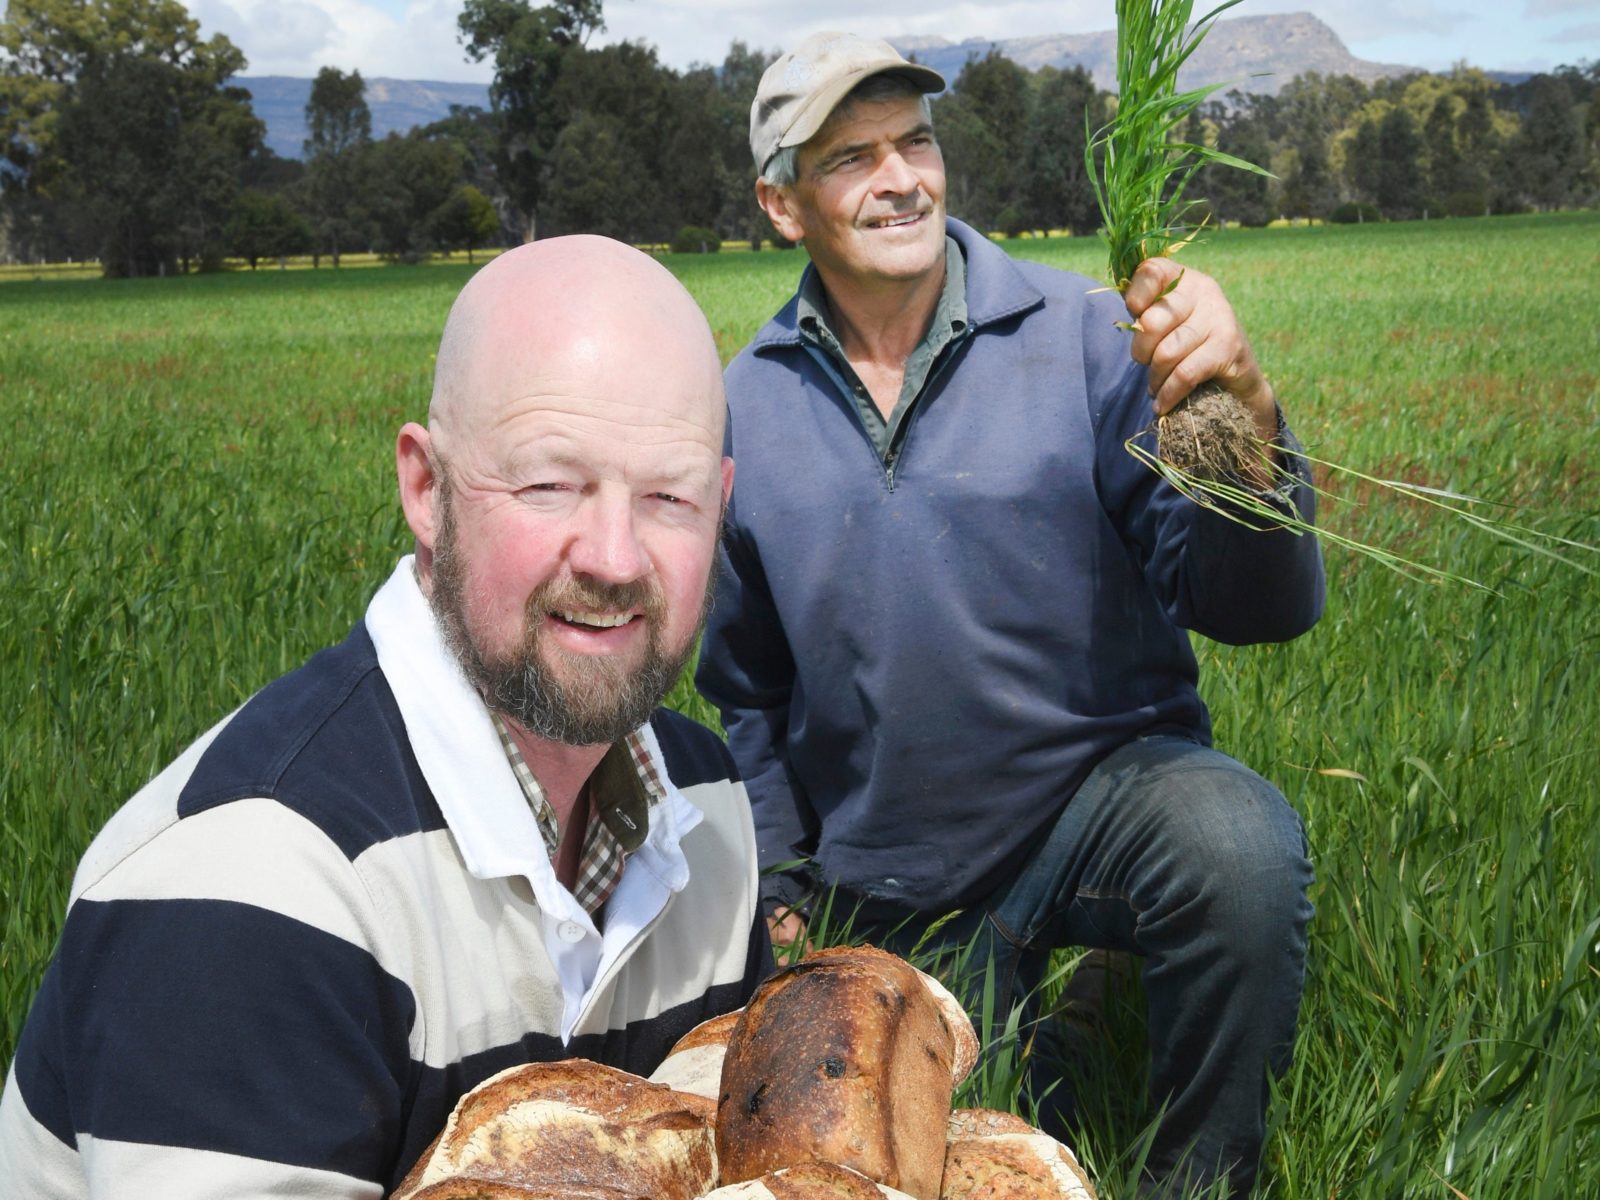 Baker Anthony Kumnick and biodynamic wheat farmer Peter Jackman